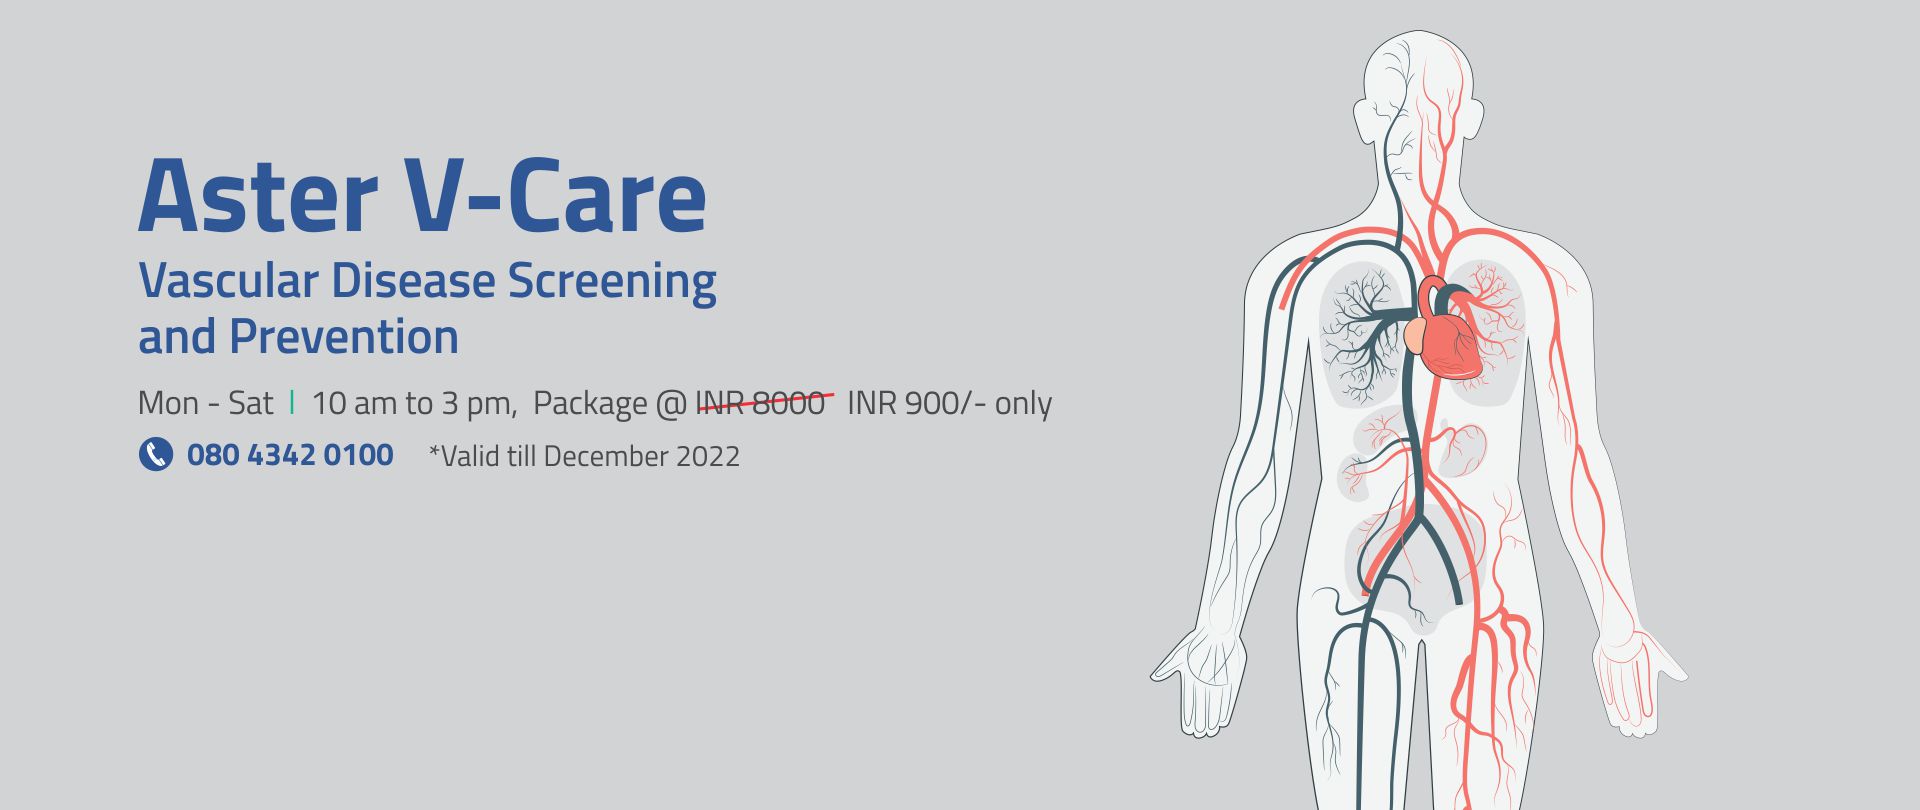 Vascular Disease Screening & Prevention in Bangalore